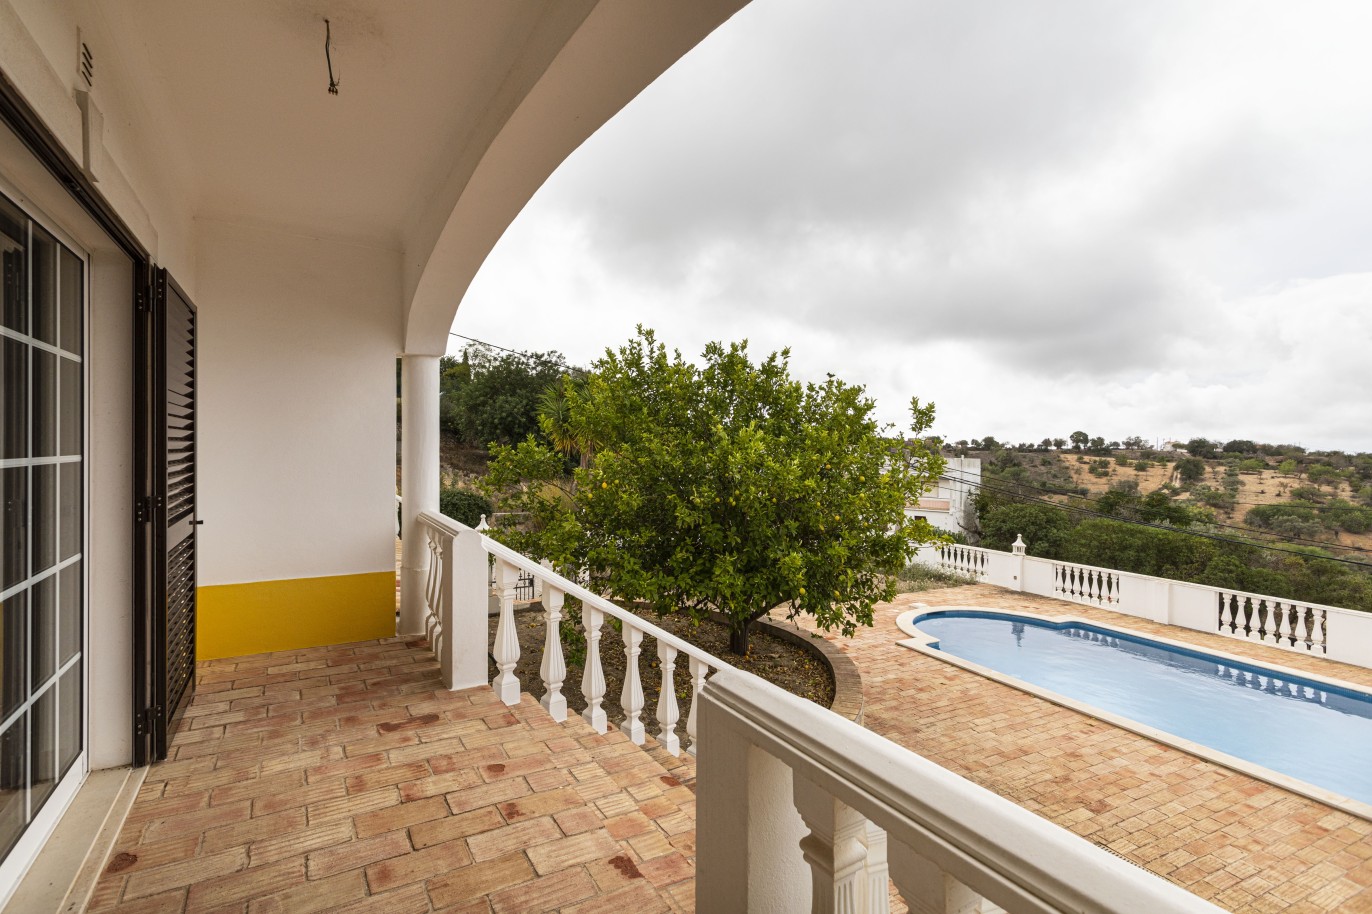 4-Bedroom Villa with swimming pool, for sale in Boliqueime, Loulé, Algarve_242648